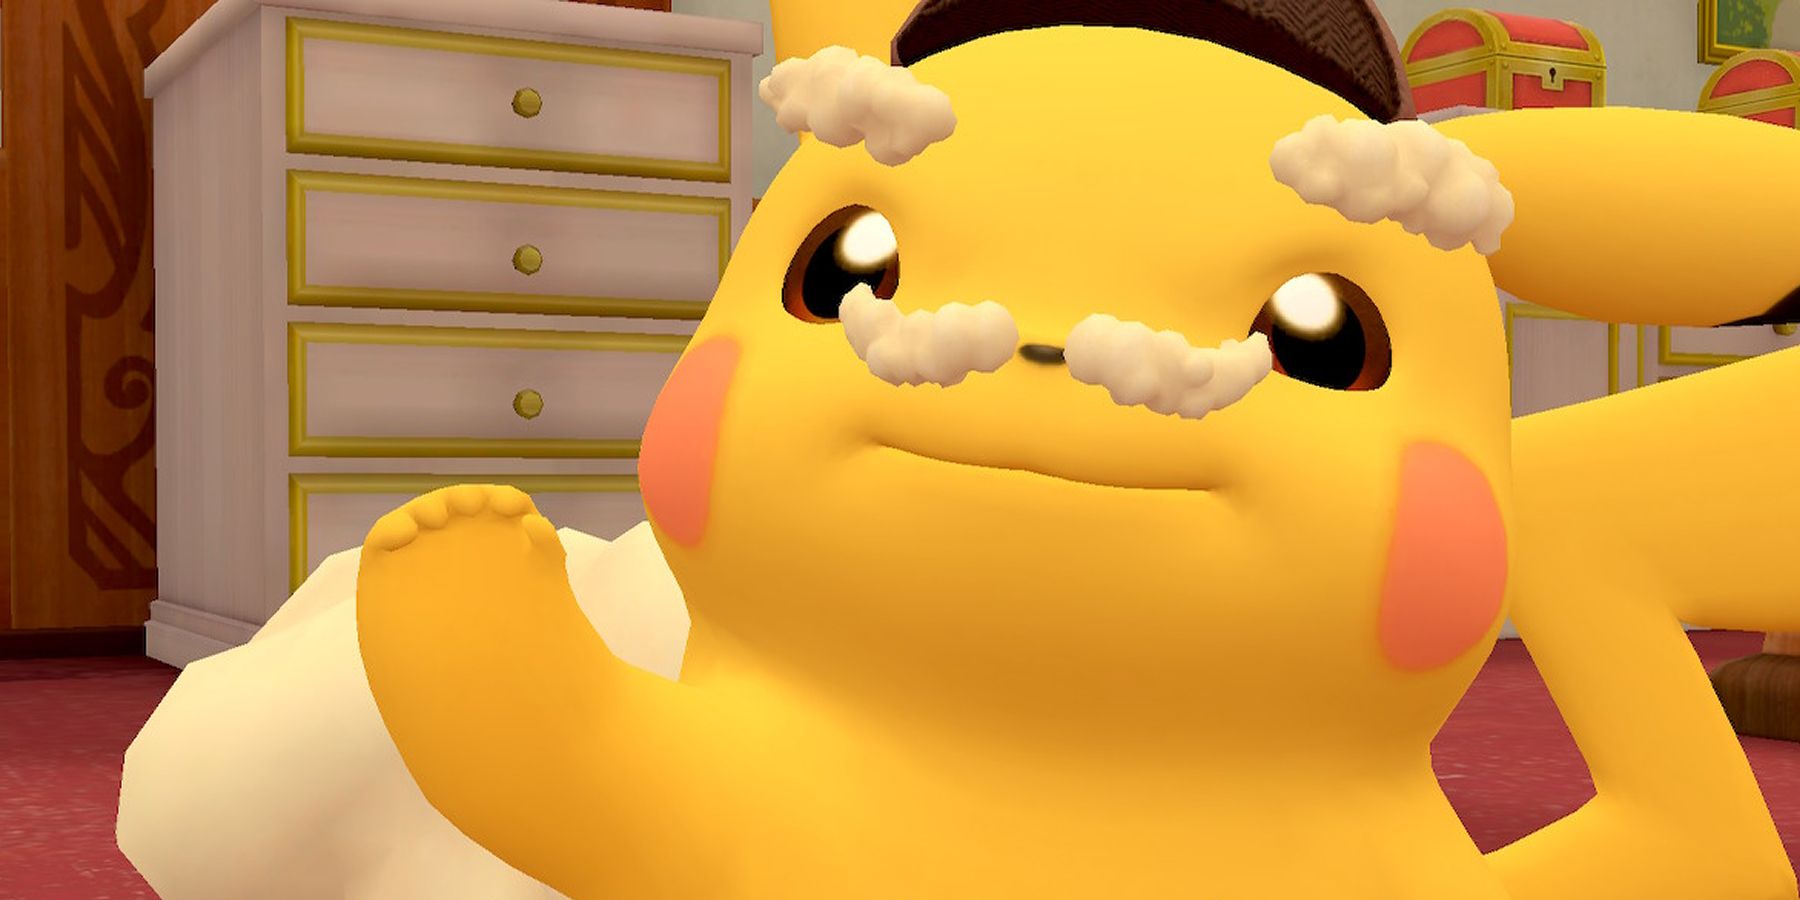 detective-pikachu-returns-investigation-cutscene-cropped